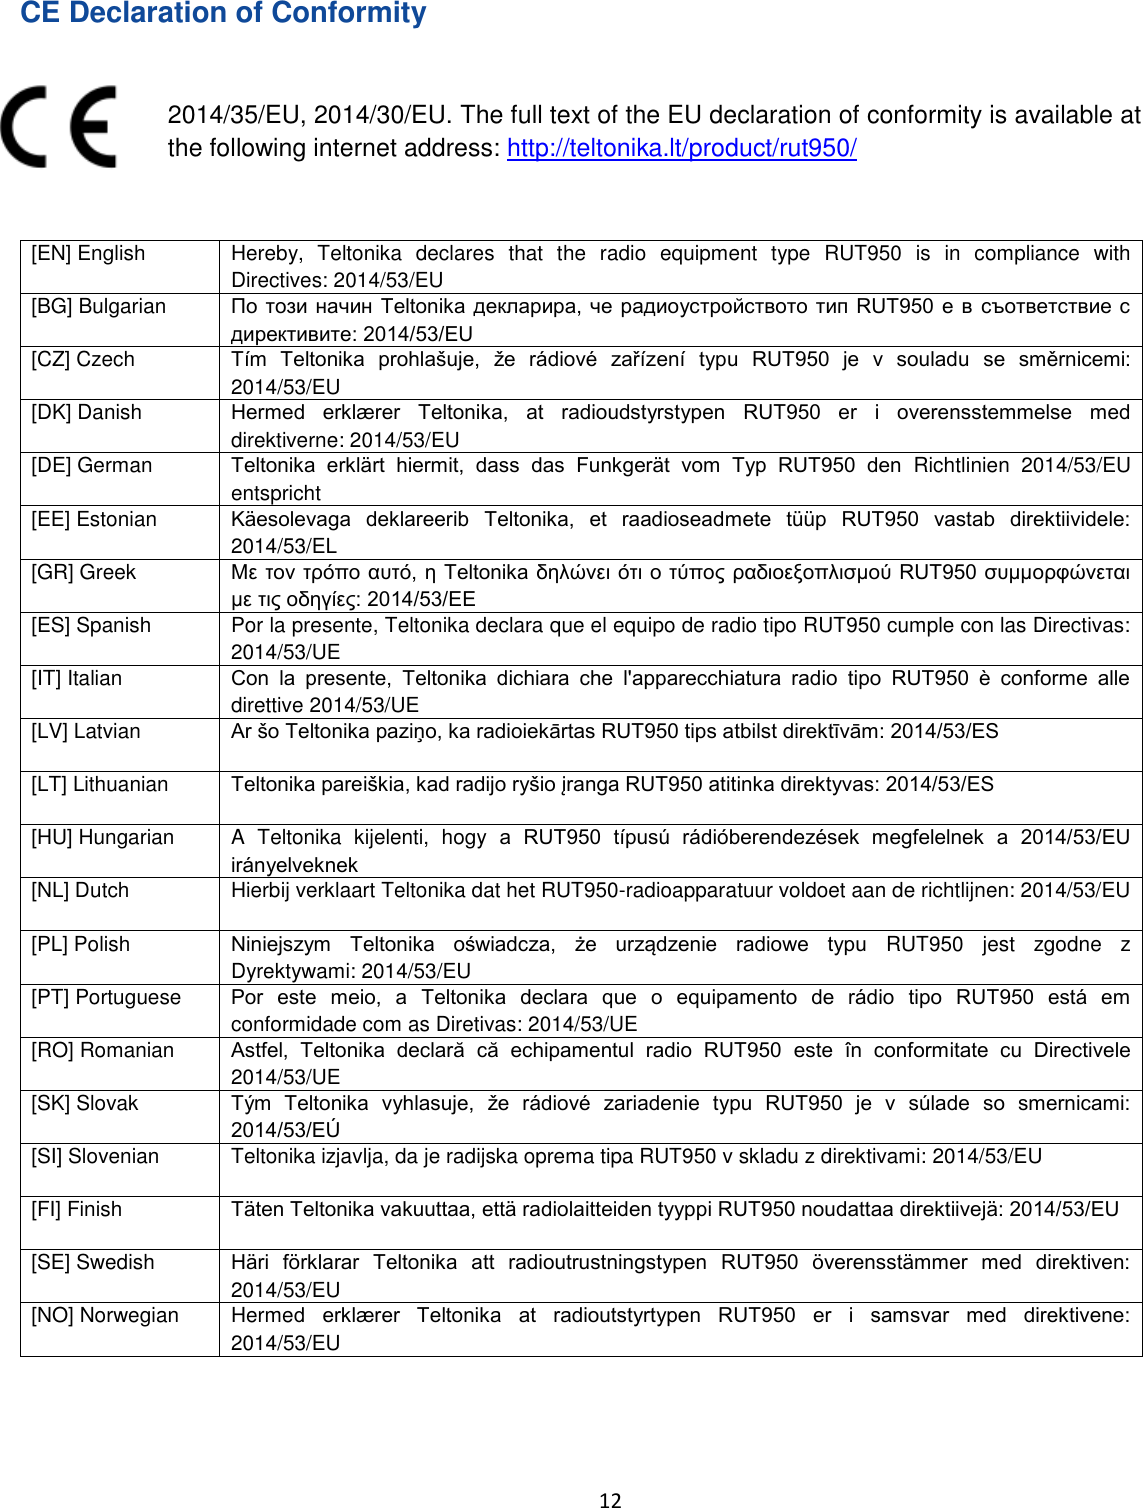  12  CE Declaration of Conformity  2014/35/EU, 2014/30/EU. The full text of the EU declaration of conformity is available at the following internet address: http://teltonika.lt/product/rut950/  [EN] English Hereby,  Teltonika  declares  that  the  radio  equipment  type  RUT950  is  in  compliance  with Directives: 2014/53/EU [BG] Bulgarian   [CZ] Czech             2014/53/EU [DK] Danish          direktiverne: 2014/53/EU [DE] German           Richtlinien  2014/53/EU entspricht [EE] Estonian         2014/53/EL [GR] Greek  [ES] Spanish Por la presente, Teltonika declara que el equipo de radio tipo RUT950 cumple con las Directivas: 2014/53/UE [IT] Italian             direttive 2014/53/UE [LV] Latvian  [LT] Lithuanian  [HU] Hungarian A  Teltonika  kijelenti,  hogy         [NL] Dutch Hierbij verklaart Teltonika dat het RUT950-radioapparatuur voldoet aan de richtlijnen: 2014/53/EU [PL] Polish        RUT950  jest  zgodne  z Dyrektywami: 2014/53/EU [PT] Portuguese               conformidade com as Diretivas: 2014/53/UE [RO] Romanian            2014/53/UE [SK] Slovak              [SI] Slovenian Teltonika izjavlja, da je radijska oprema tipa RUT950 v skladu z direktivami: 2014/53/EU [FI] Finish  [SE] Swedish         2014/53/EU [NO] Norwegian Herme          2014/53/EU  